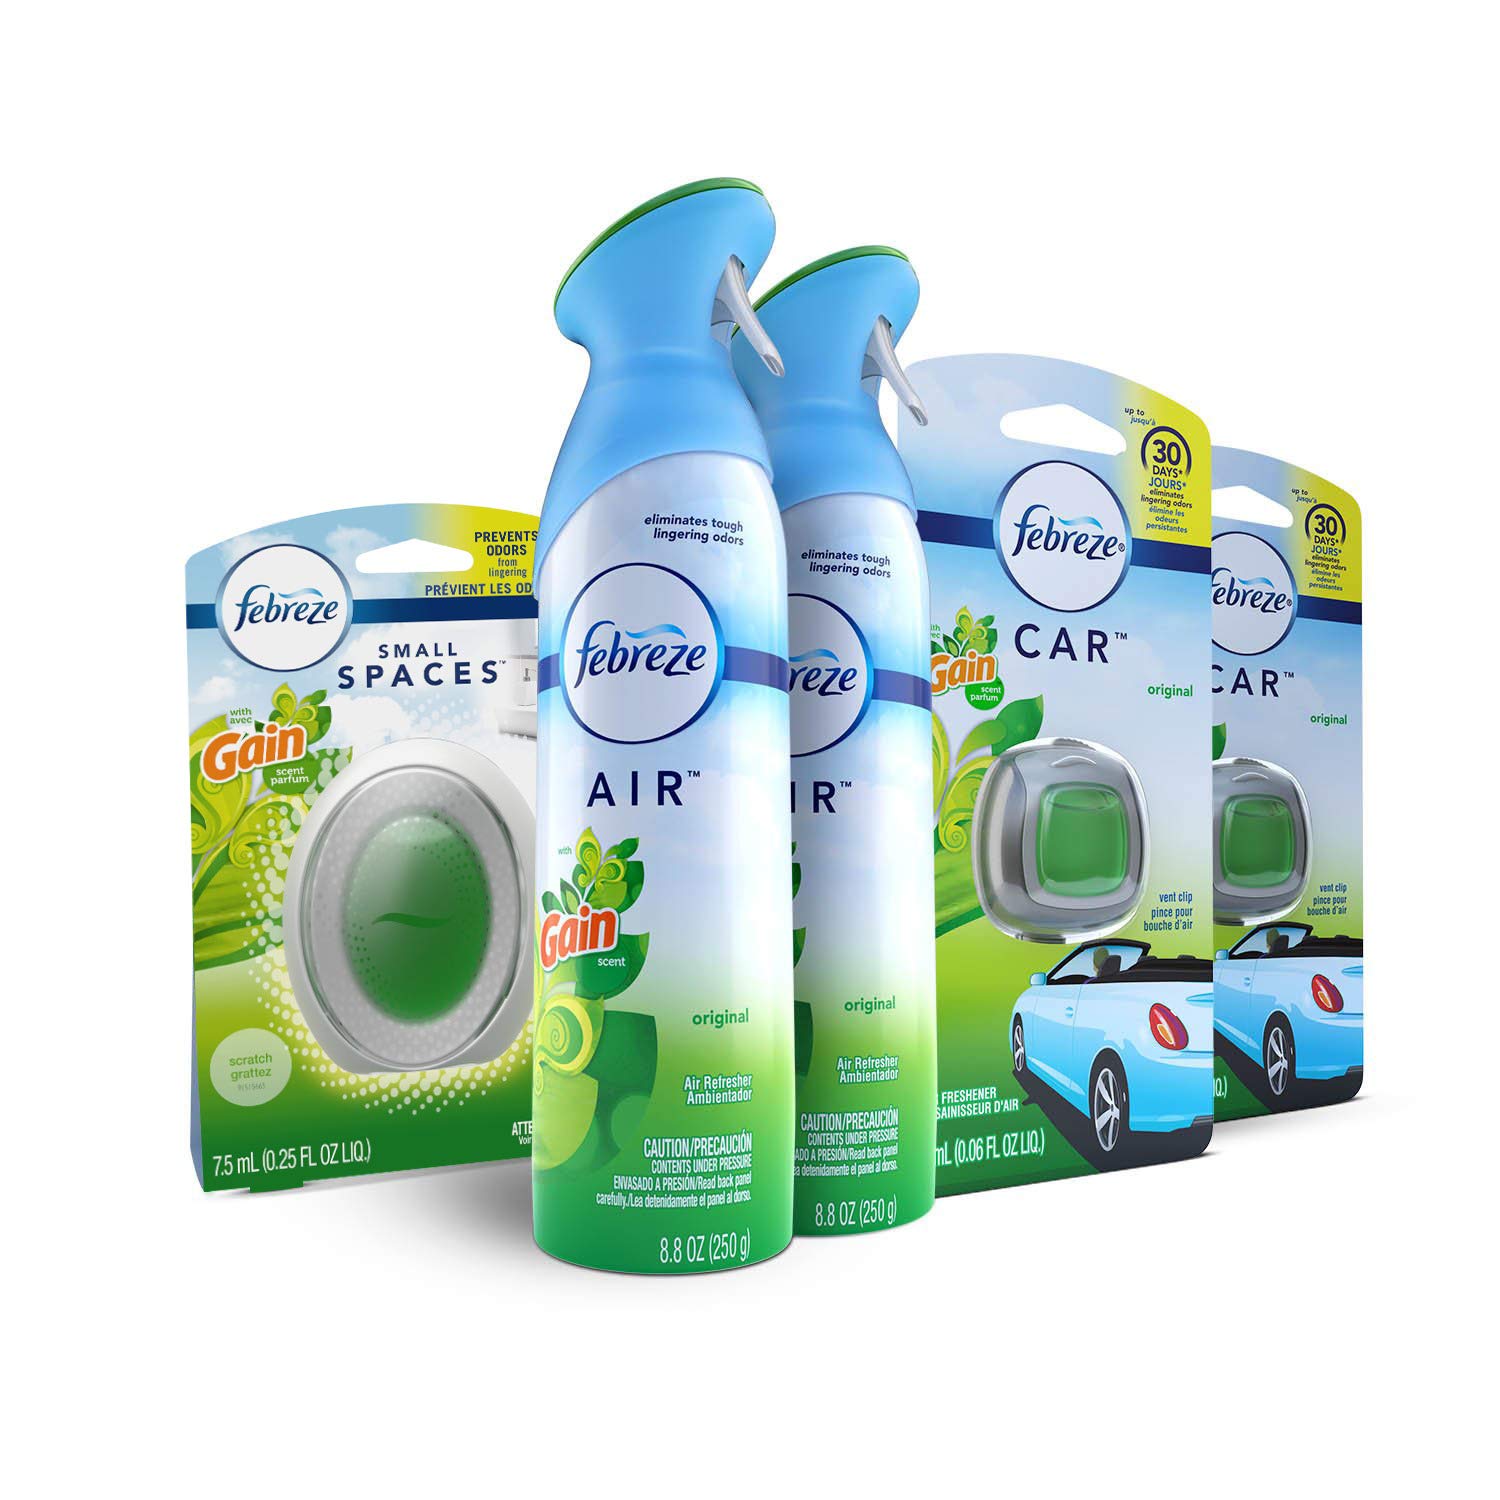 Febreze Air Freshener Bundle, Gain Original (2 Air Effects, 2 Car Vent Clips, 1 Small Spaces Air Freshener Kit)